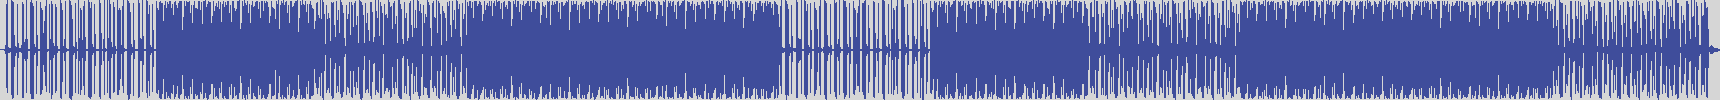 nf_boyz_records [NFY068] Baby Maluma Dj - Octopus [Original Mix] audio wave form